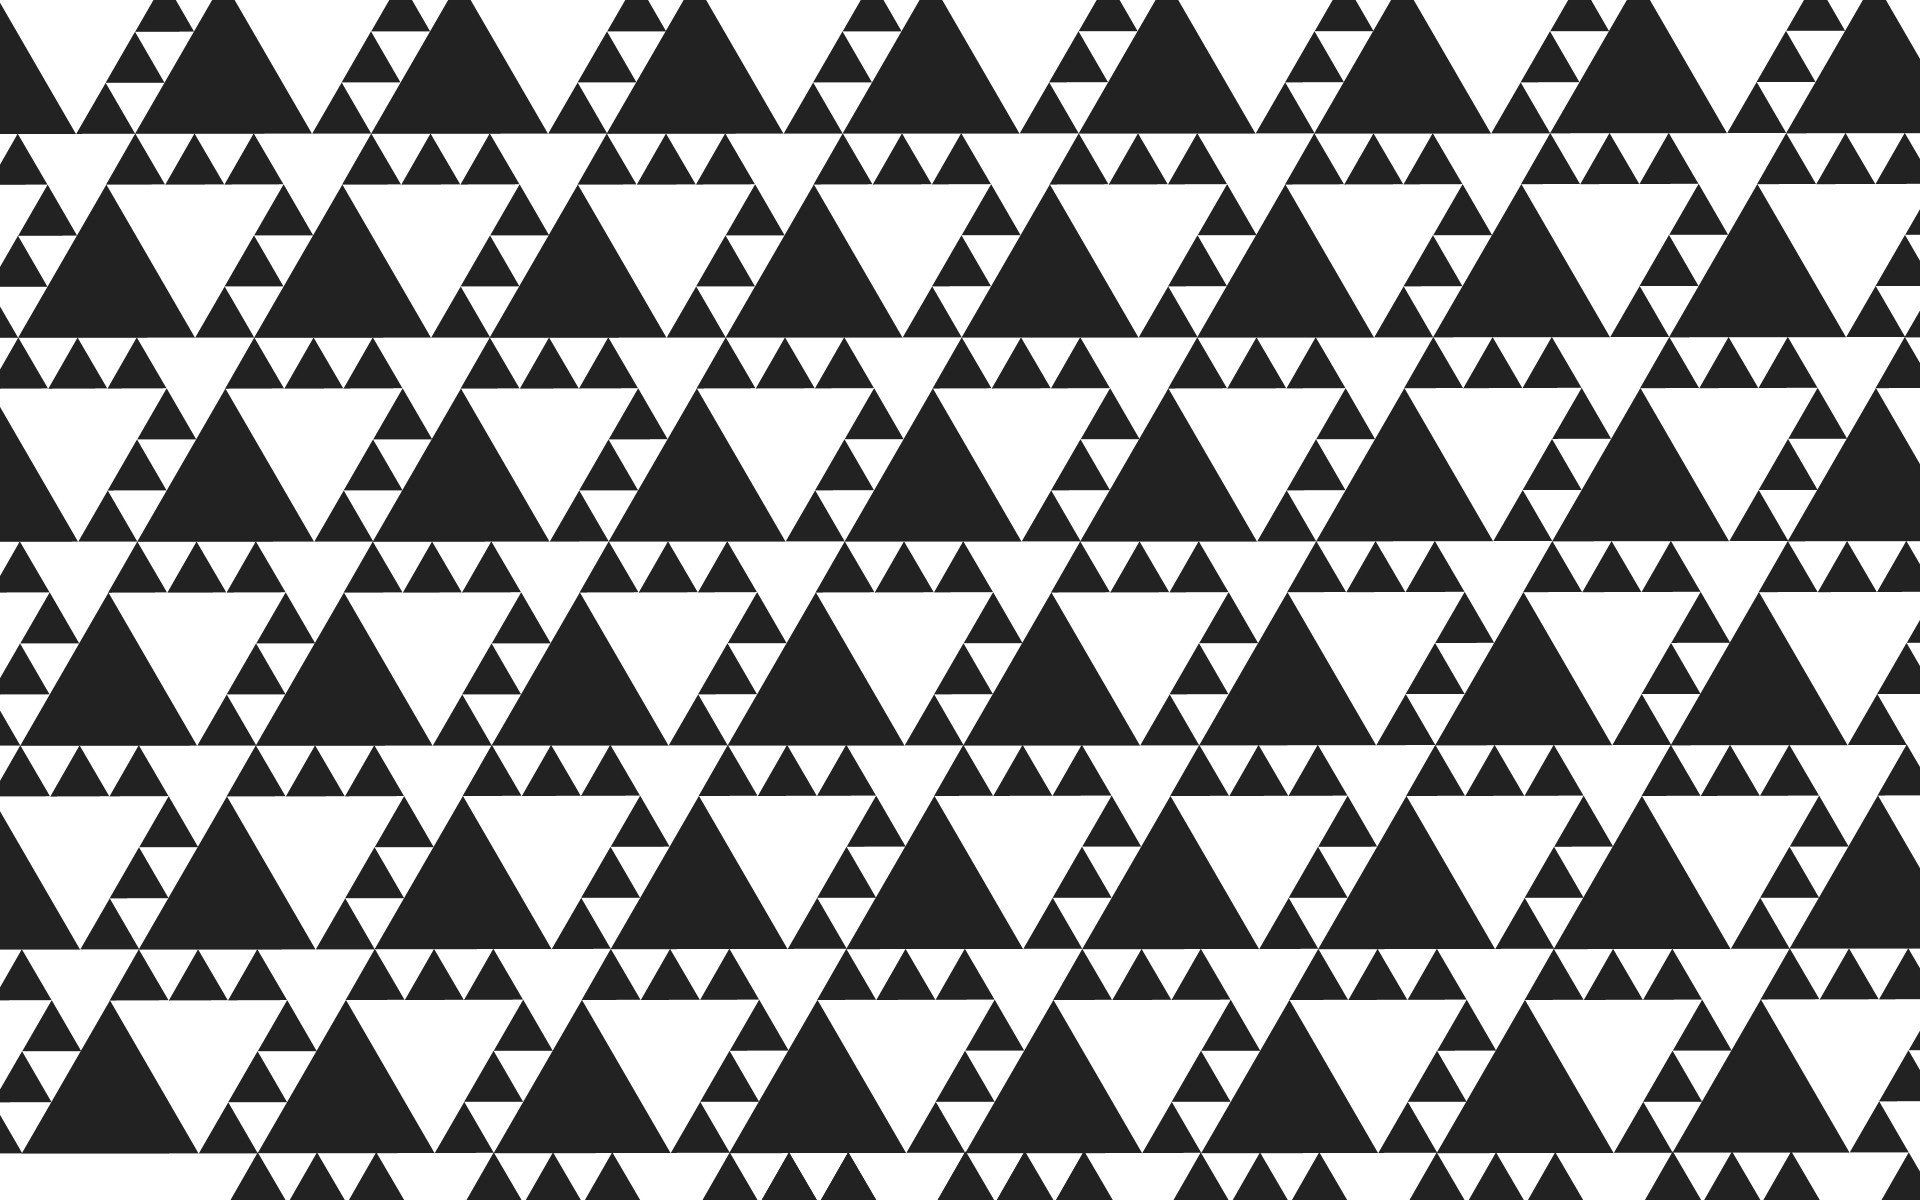 Patterns geometry wallpaper 1920x1200 259728 WallpaperUP